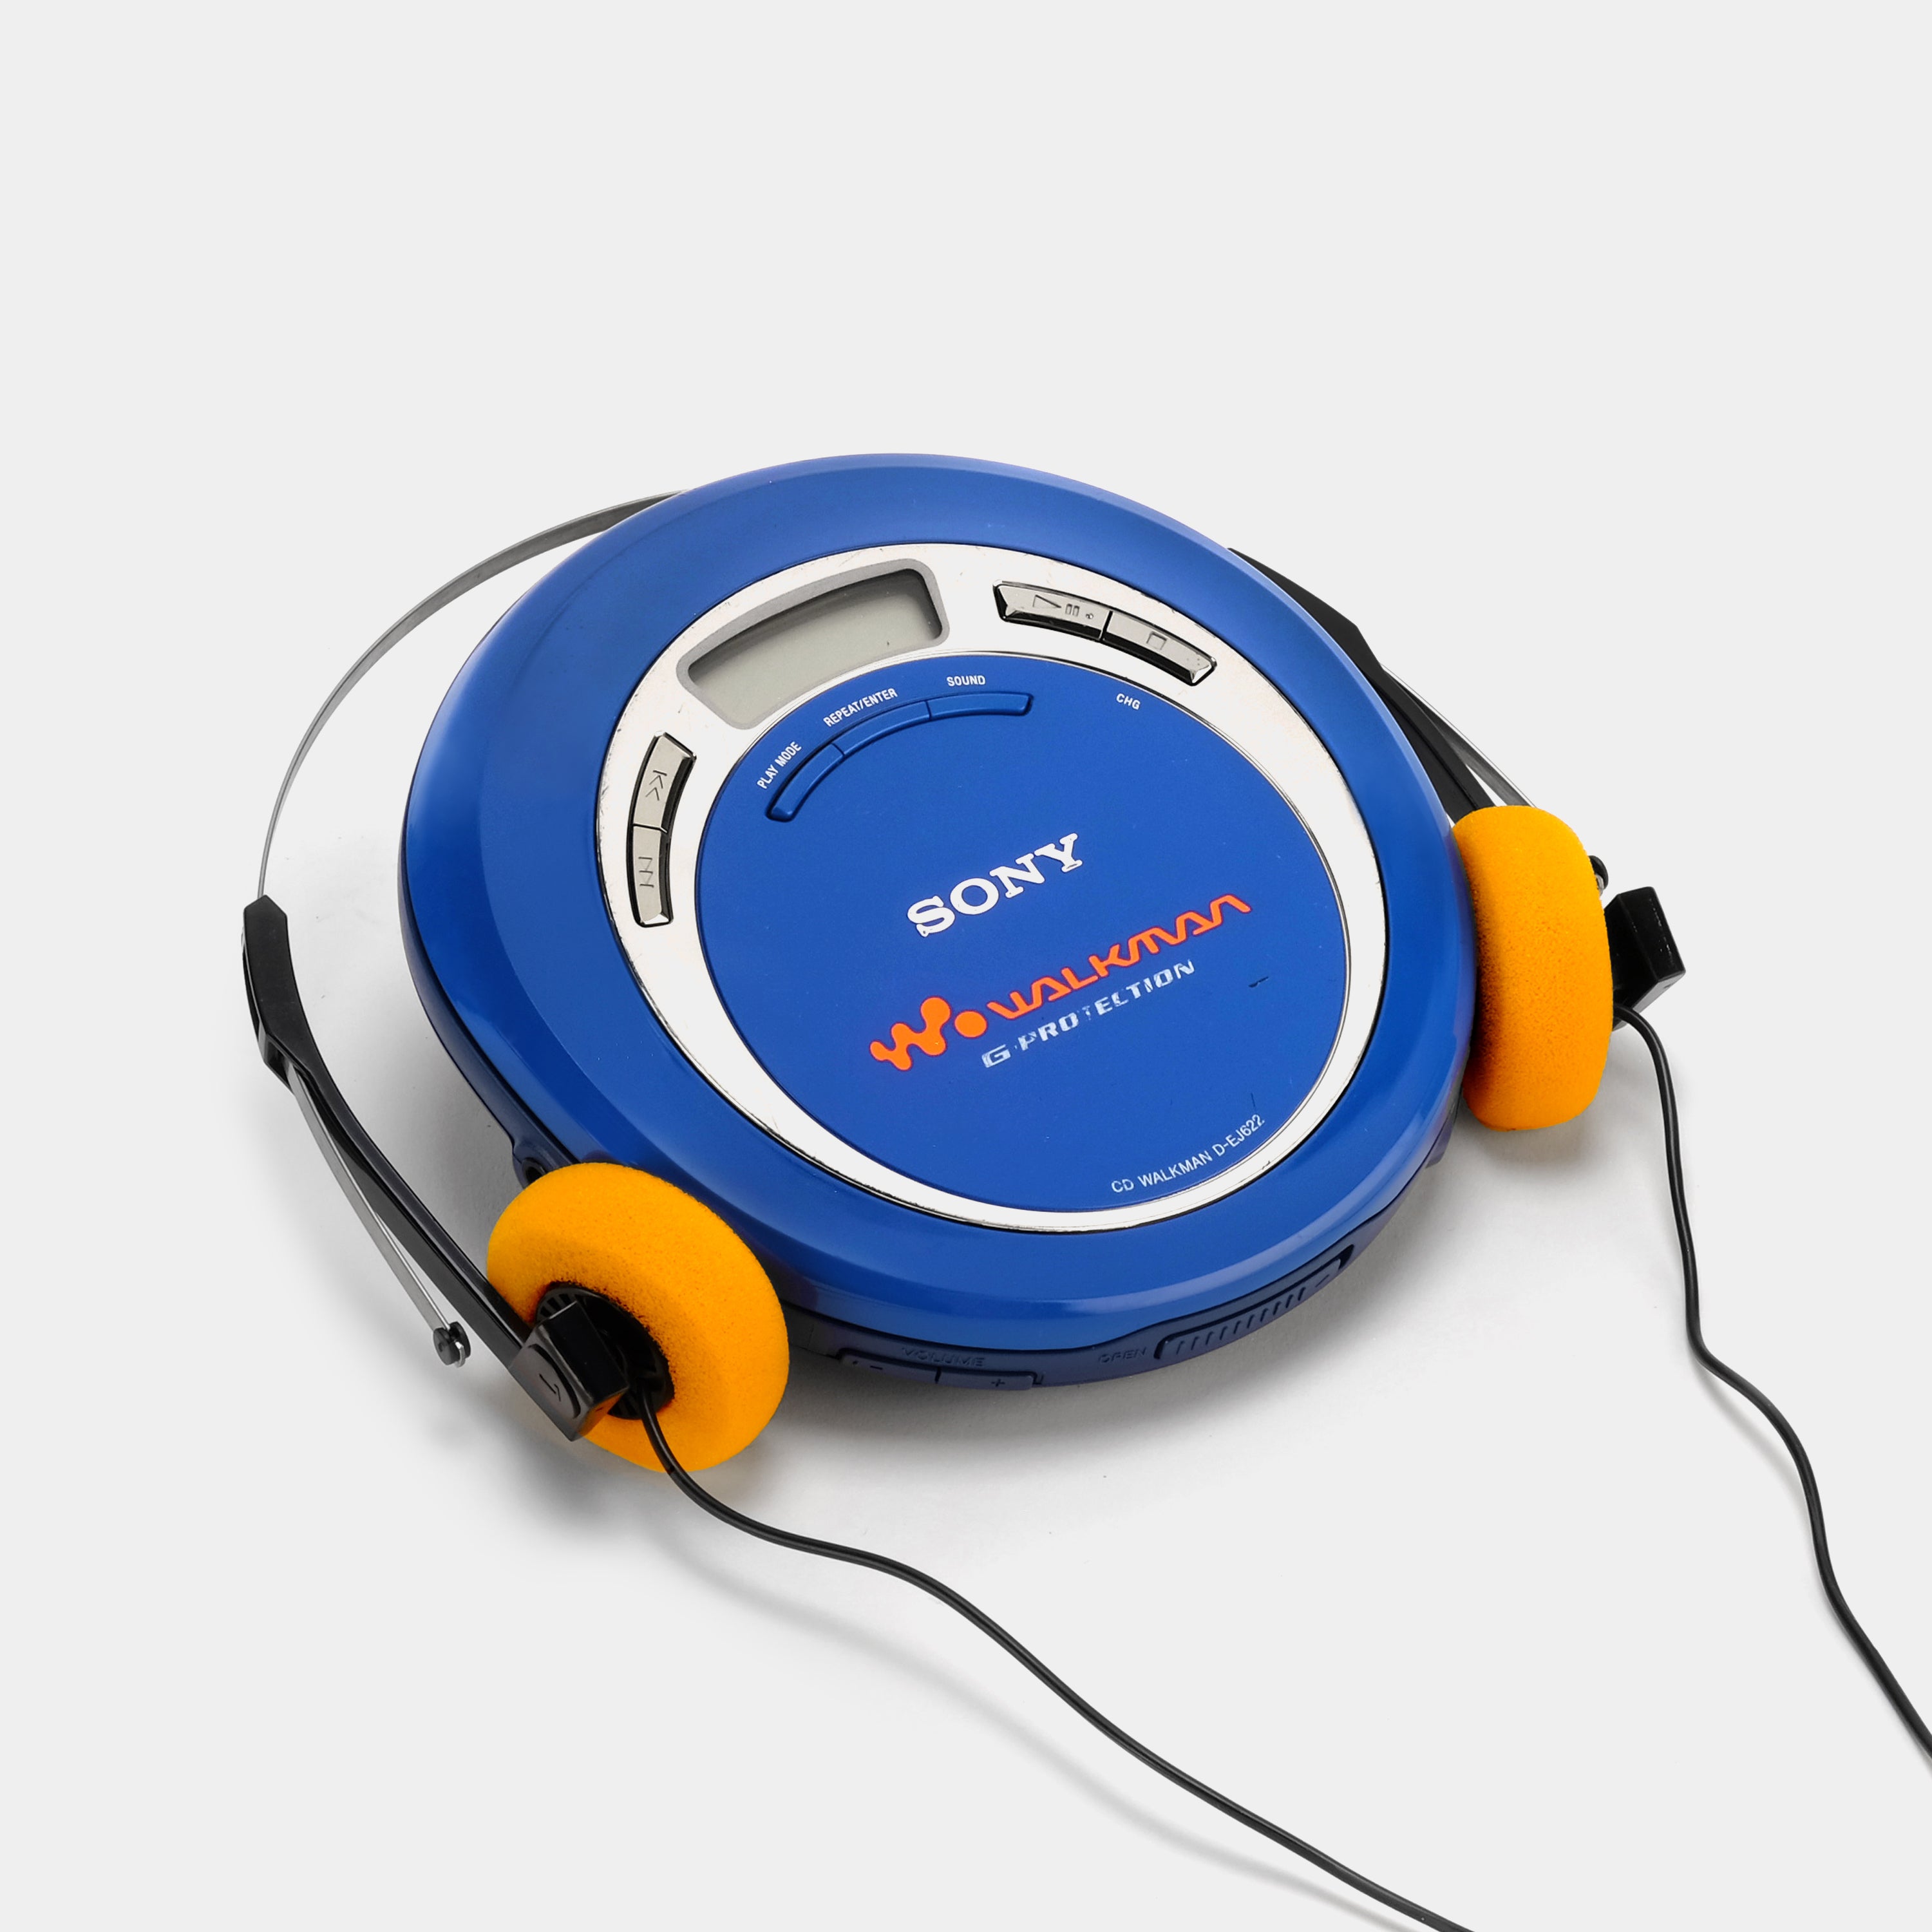 Sony Walkman D-EJ622 Blue Portable CD Player